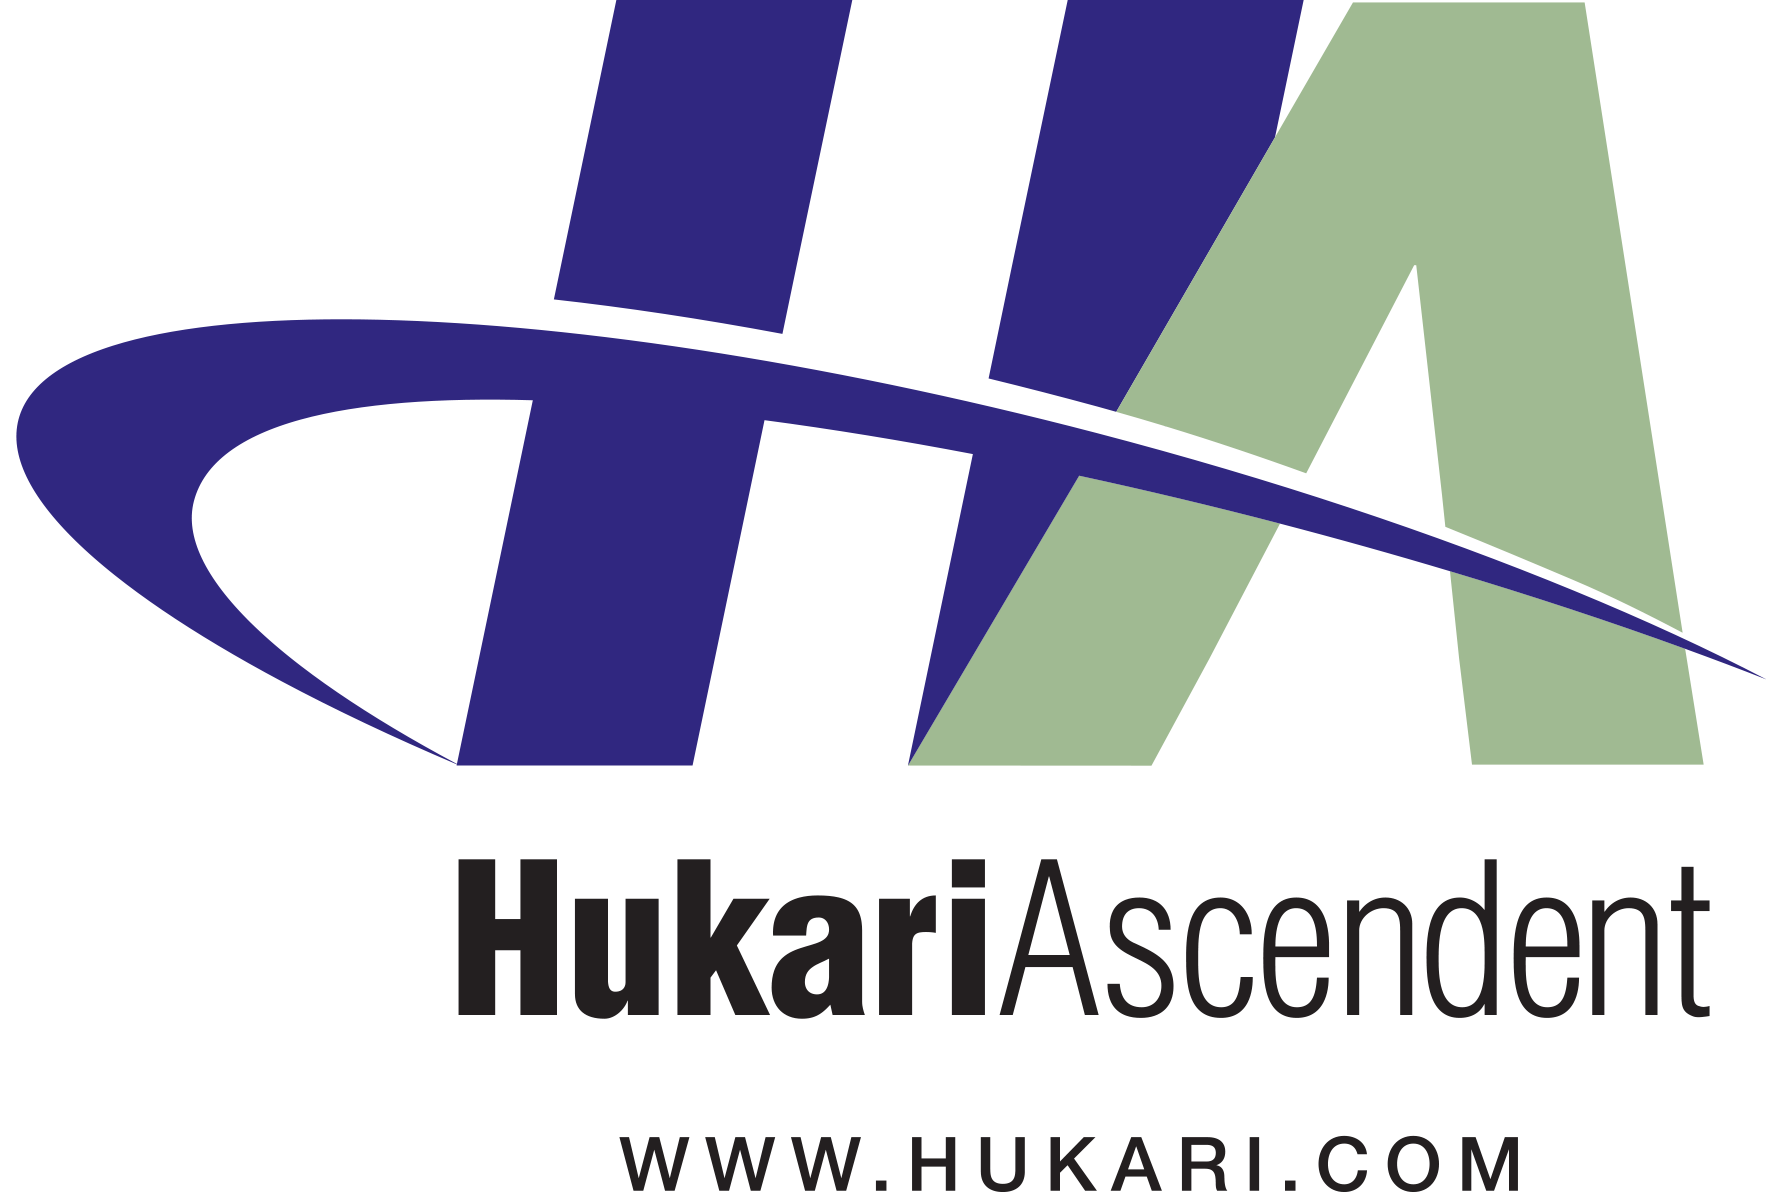 Hukari Ascendent